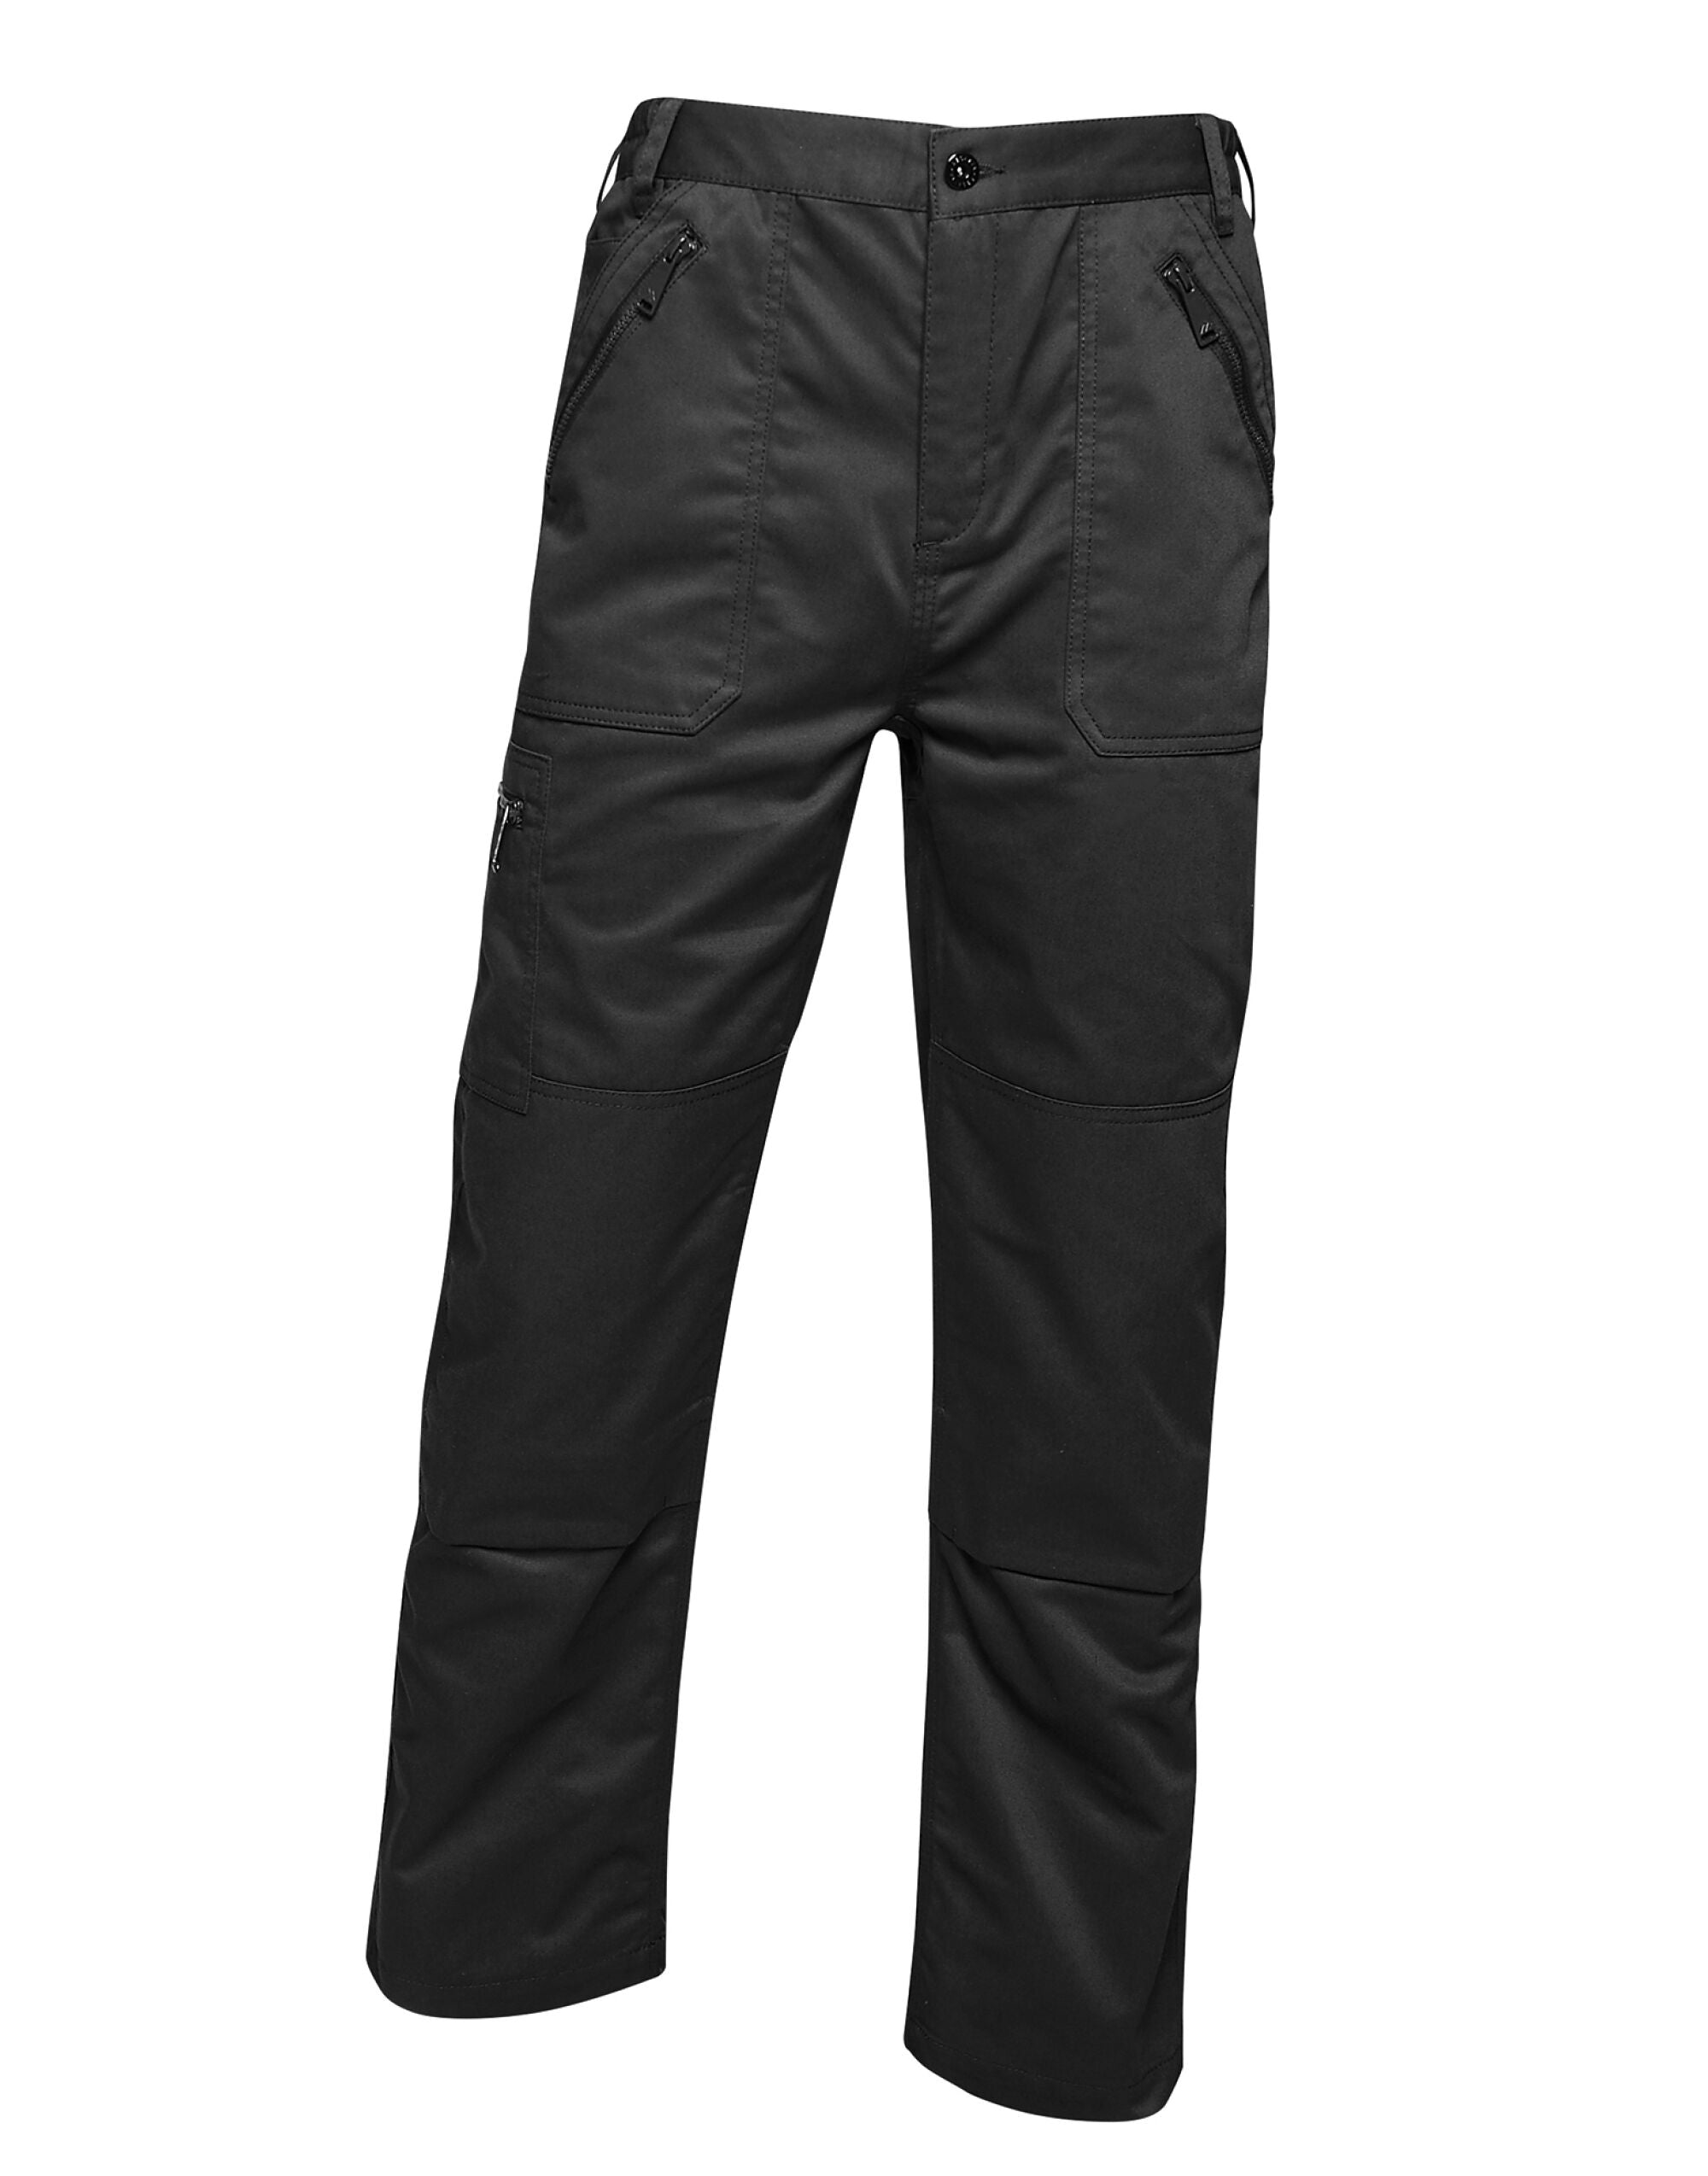 REGATTA PROFESSIONAL Pro Action Trousers (R) Durable water repellent finish (TRJ600R)